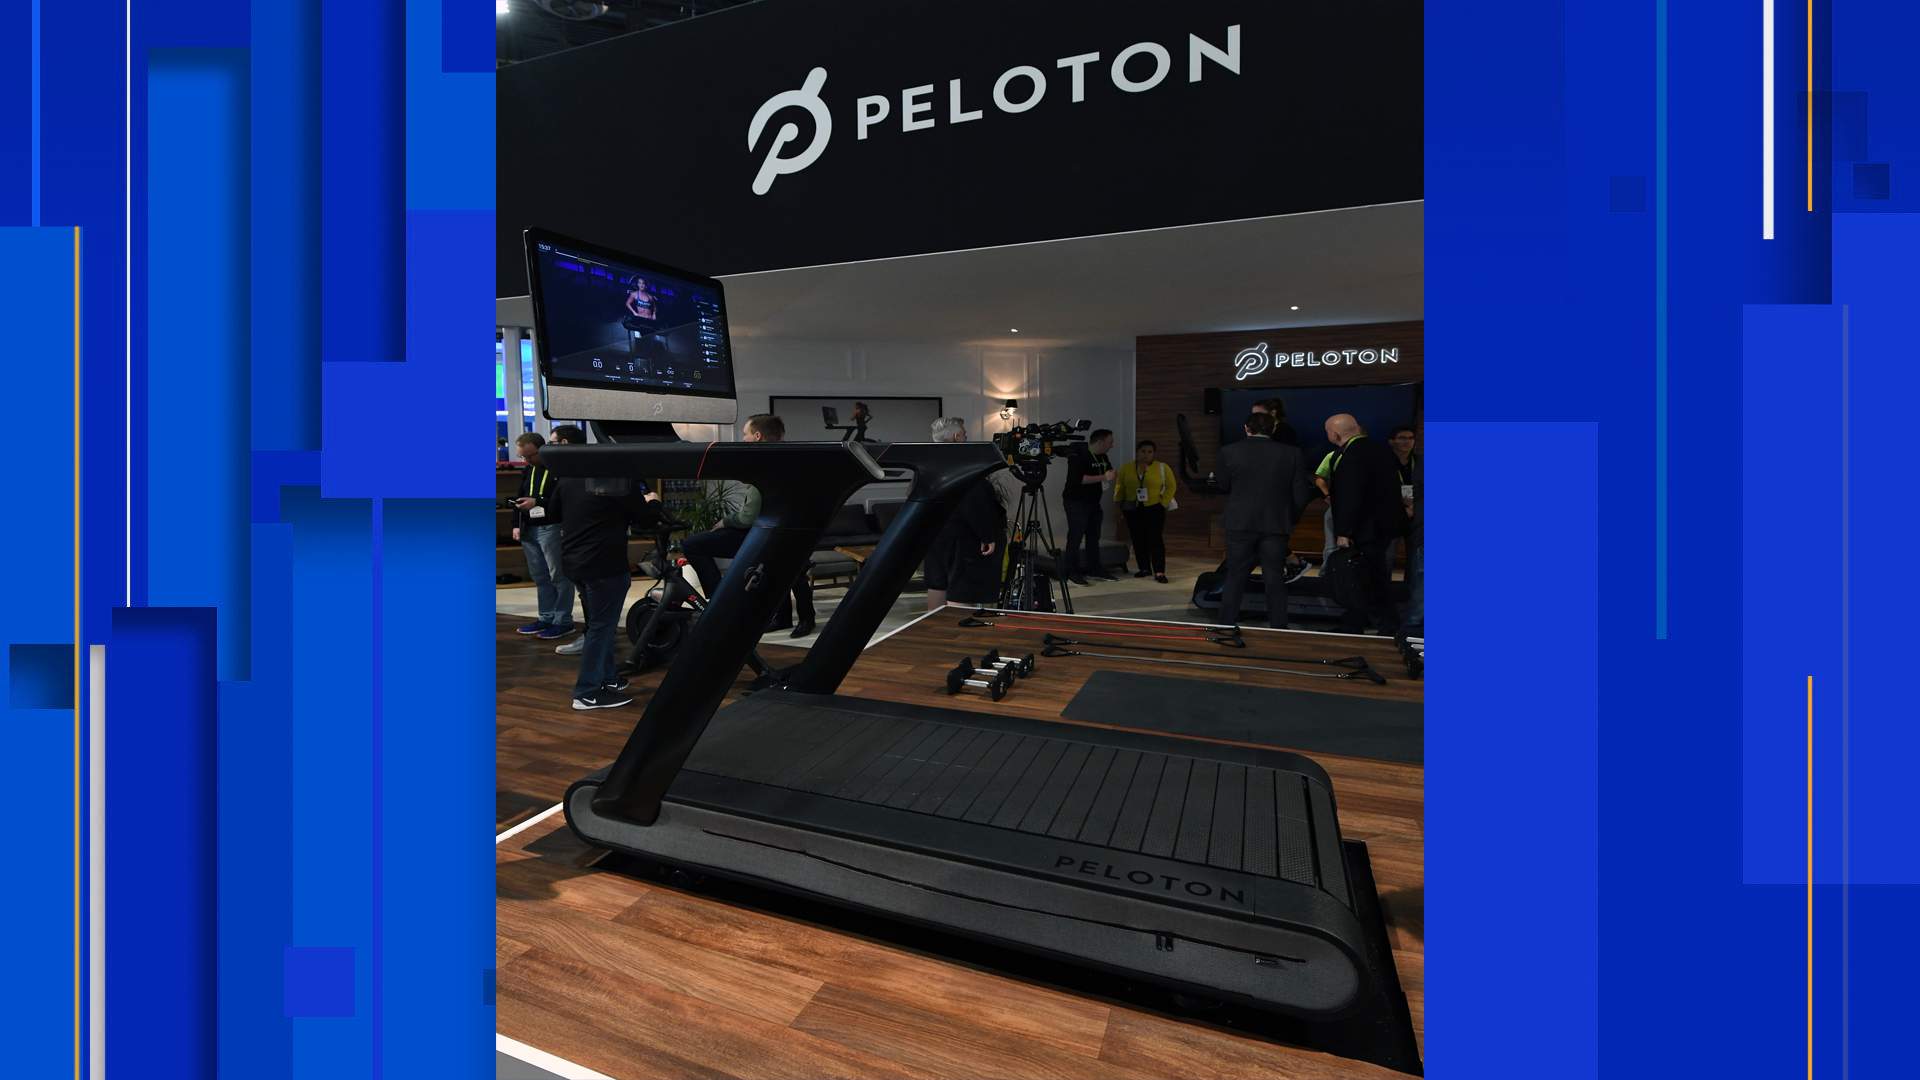 Child dies in accident involving Peloton treadmill, CEO announces